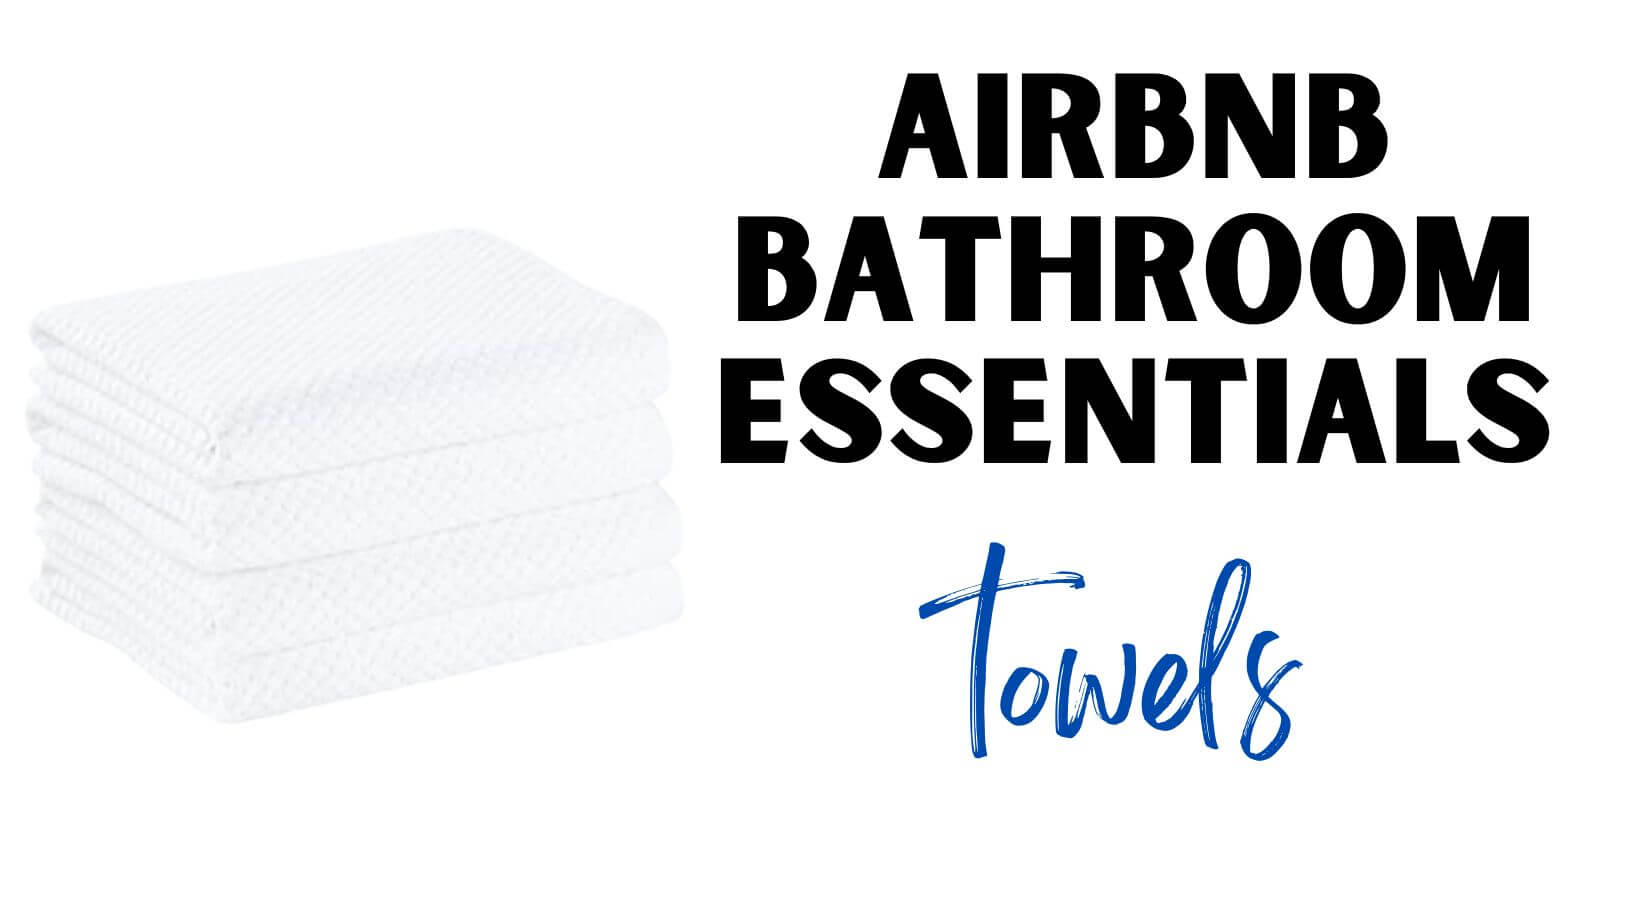 Airbnb Bathroom Essentials Towels